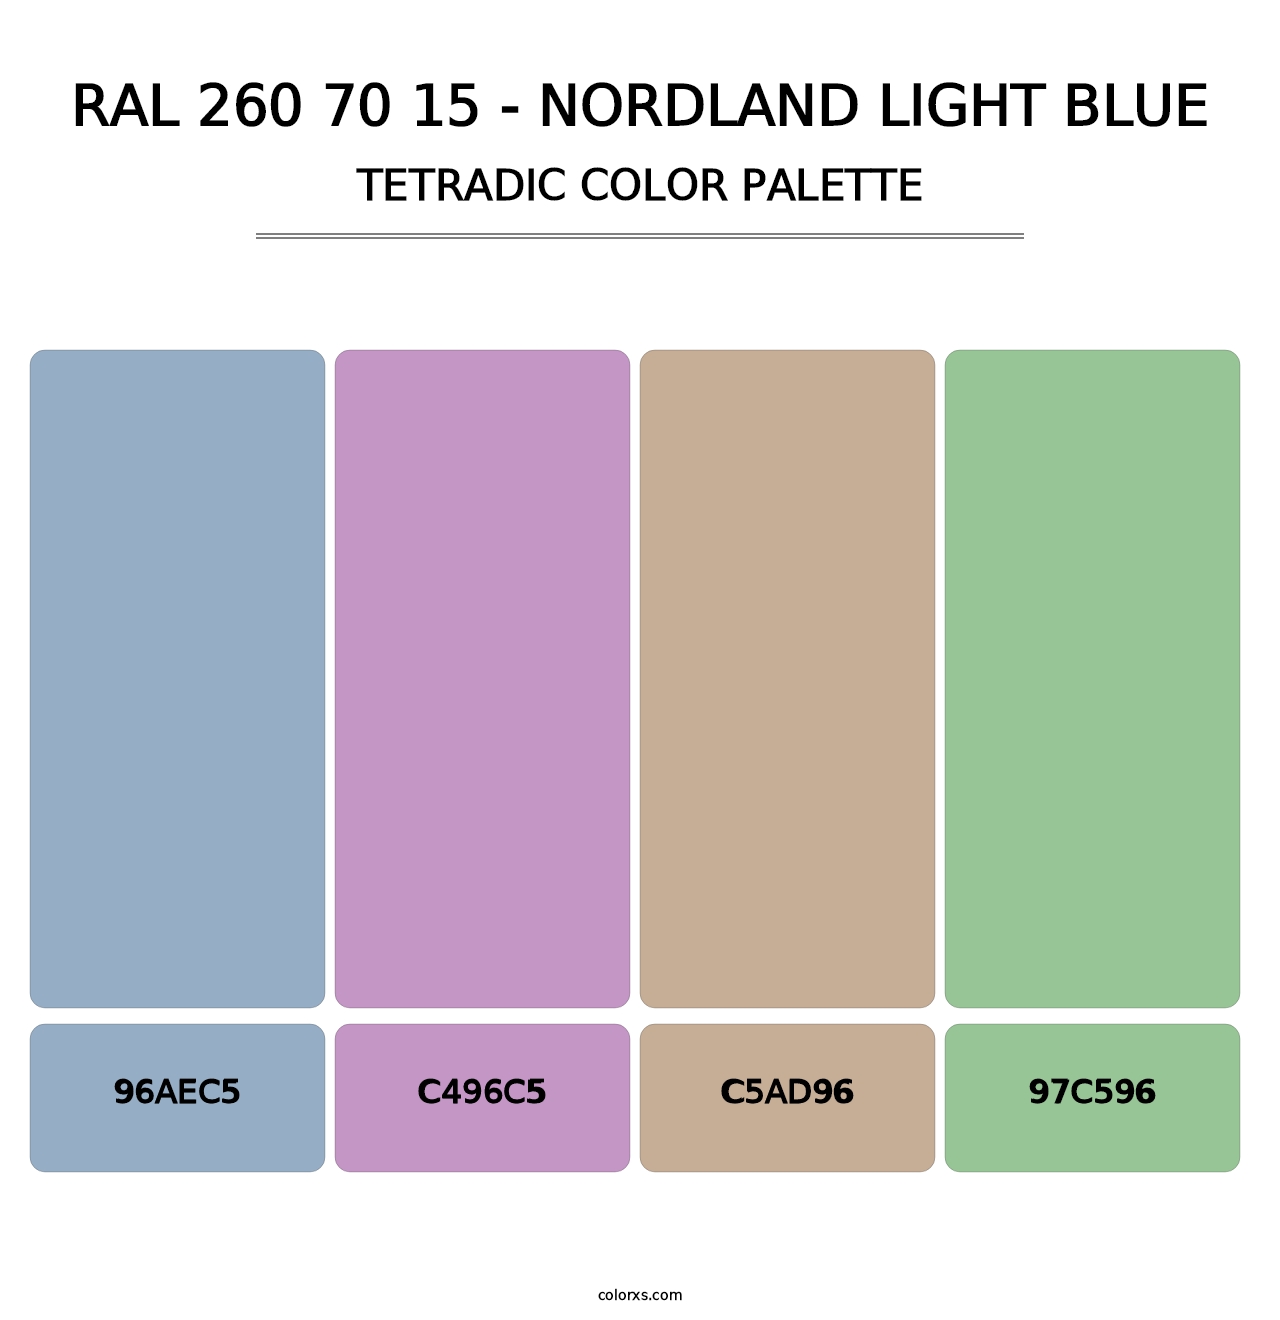 RAL 260 70 15 - Nordland Light Blue - Tetradic Color Palette